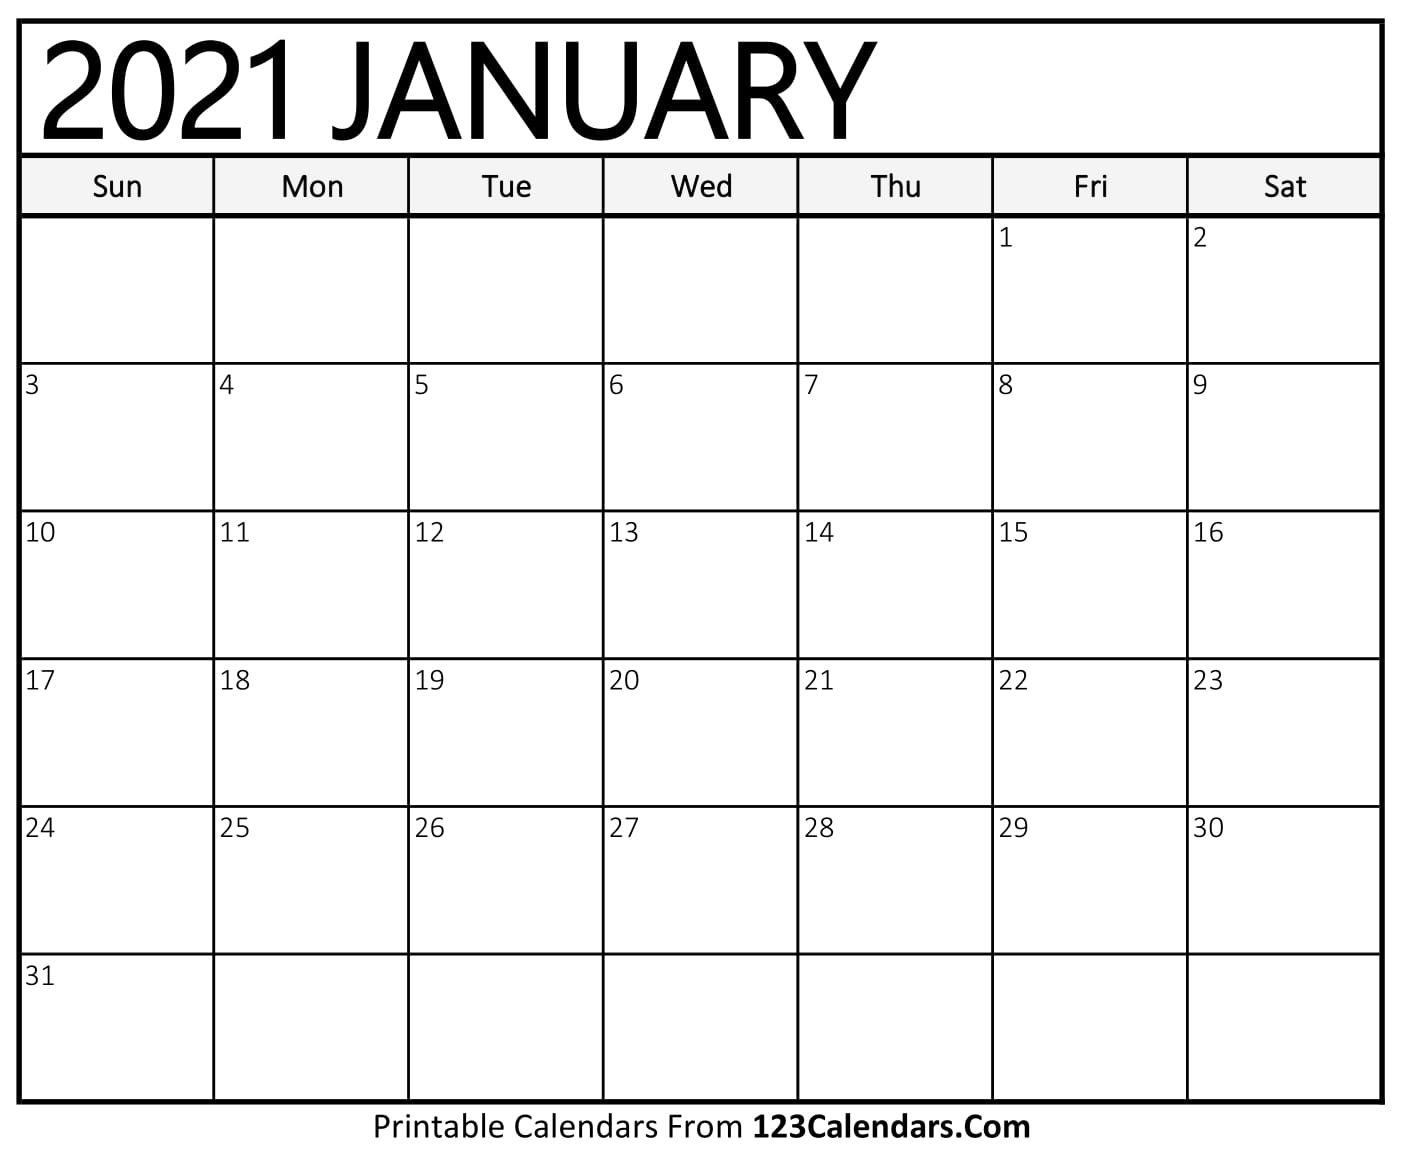 January 2021 Calendar Template Printable January 2021 Calendar Templates | 123Calendars.com